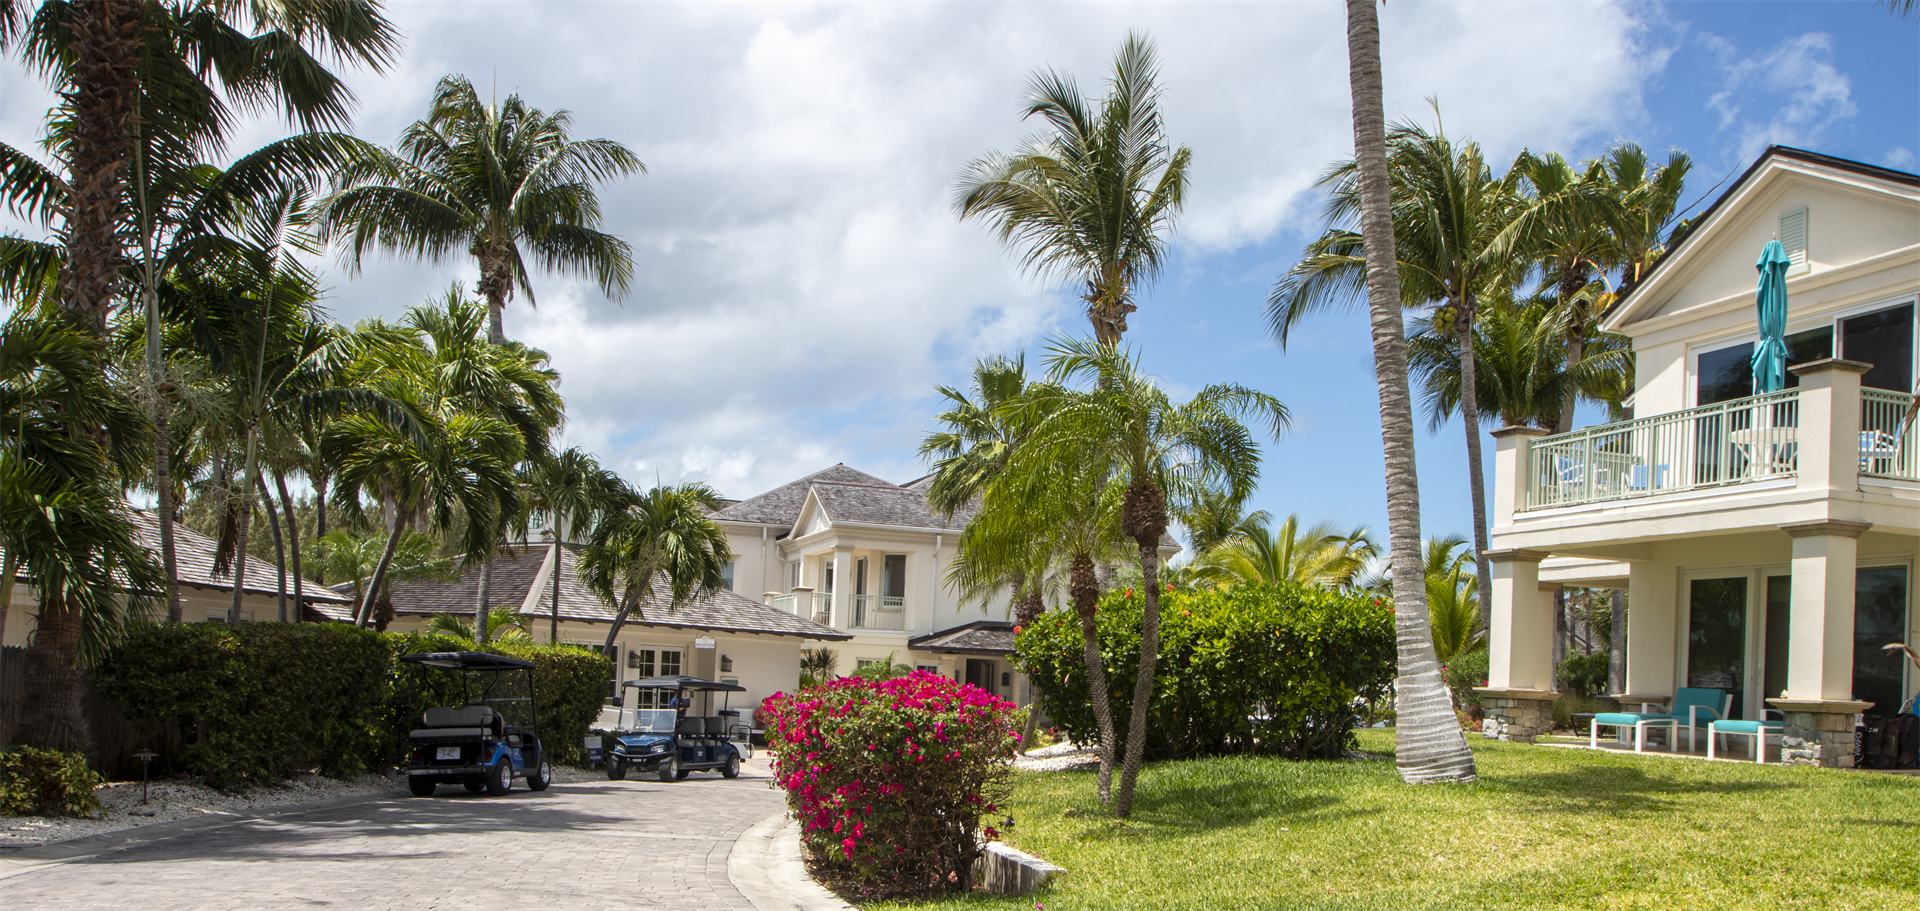 10. Condo / Townhome / Villa for Sale at Emerald Bay, Exuma Bahamas